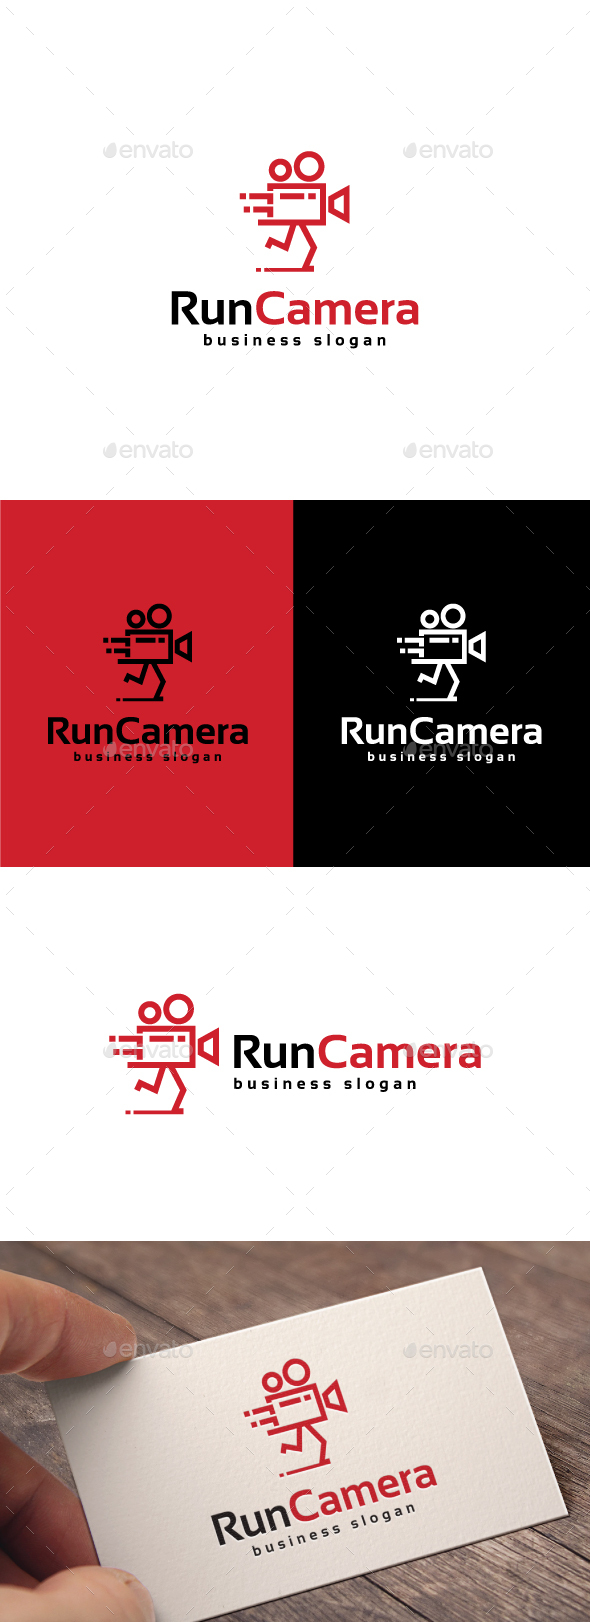 [DOWNLOAD]Run Video Camera Logo